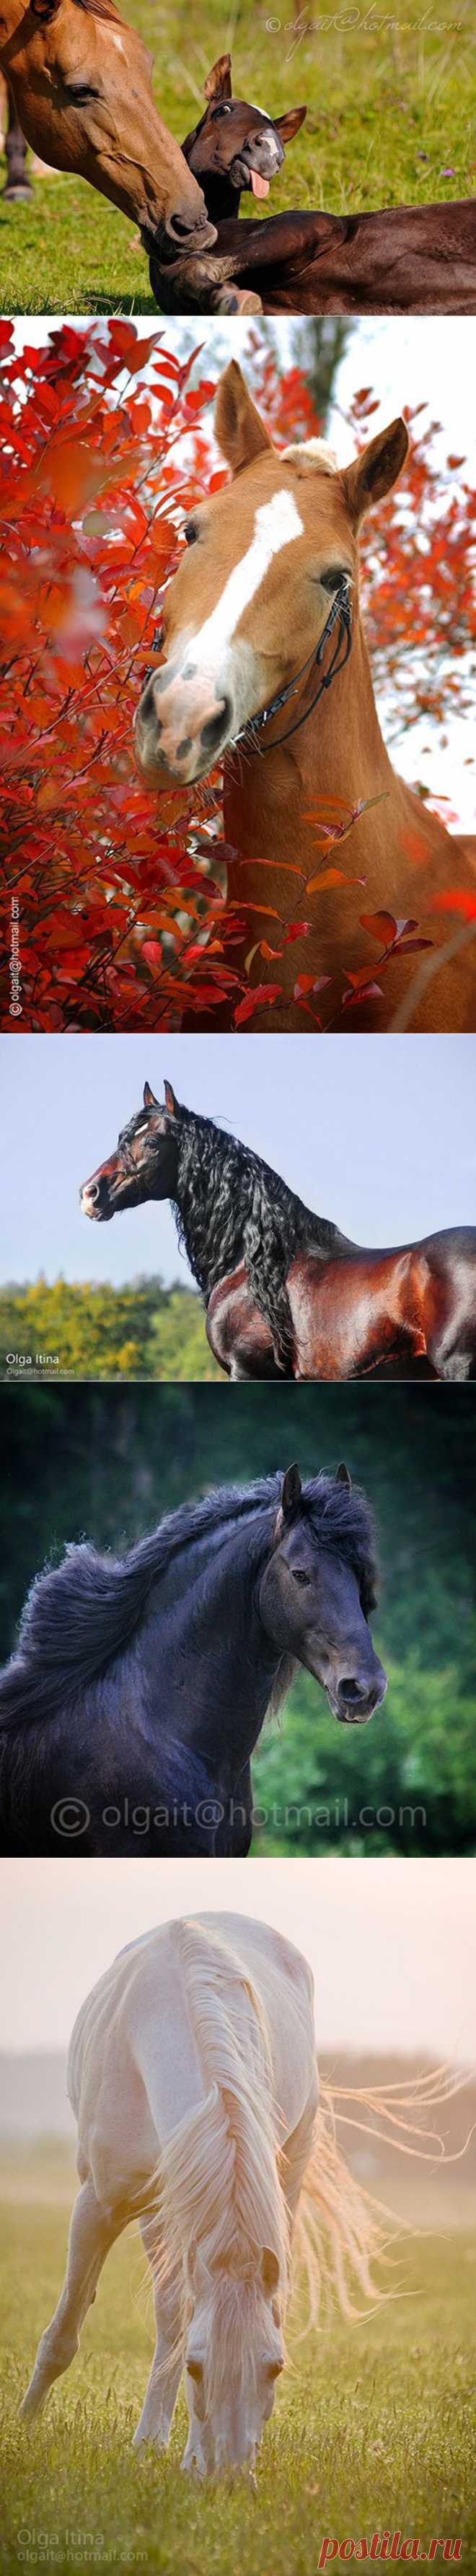 Красота лошади в фотографиях Olga Itina | Дай лапку